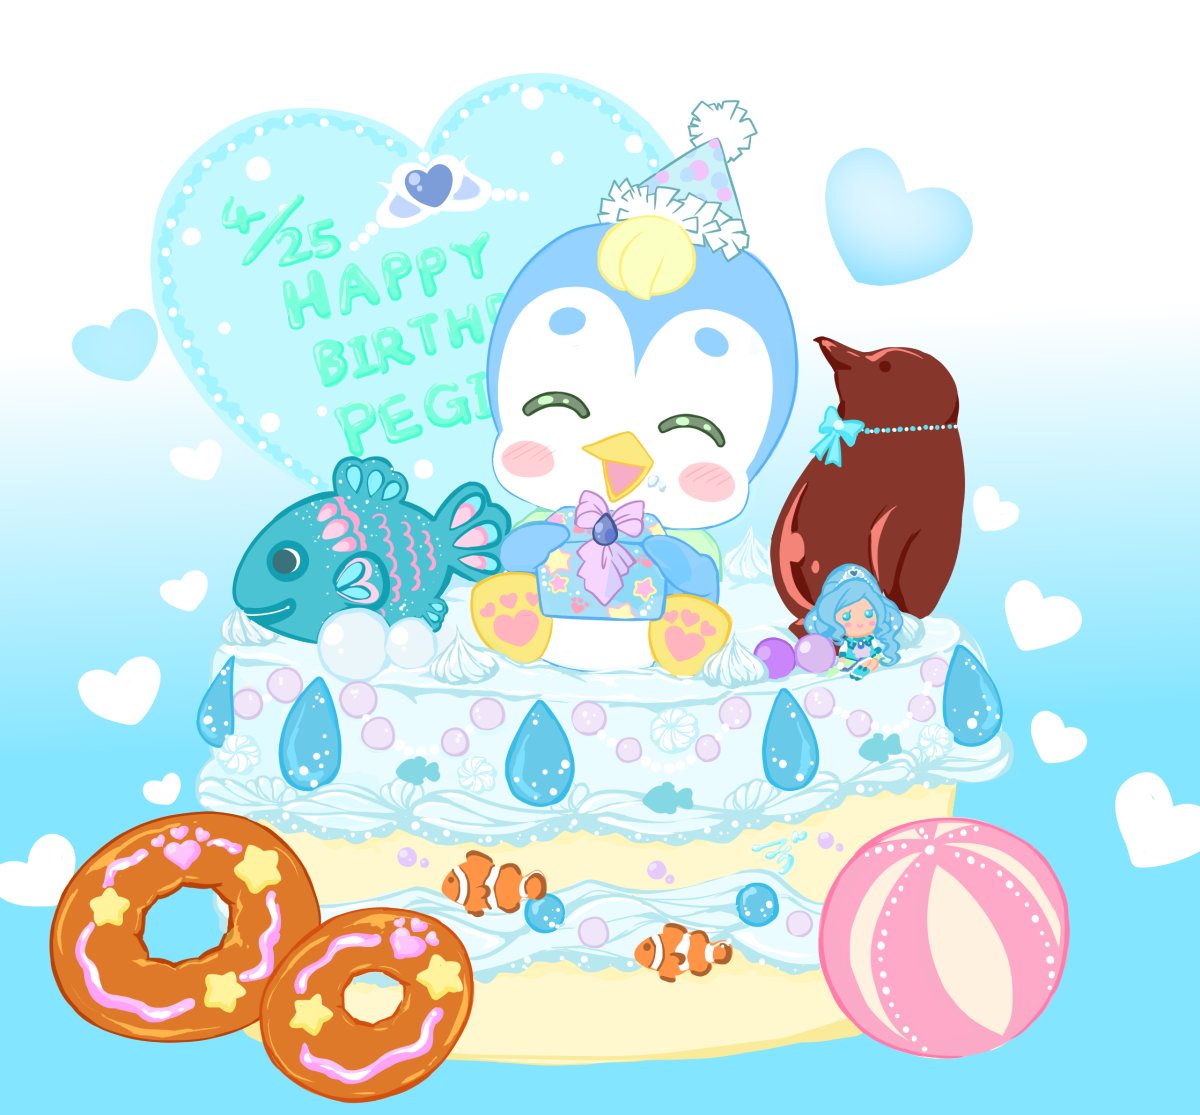 food happy birthday penguin closed eyes hat heart cake  illustration images